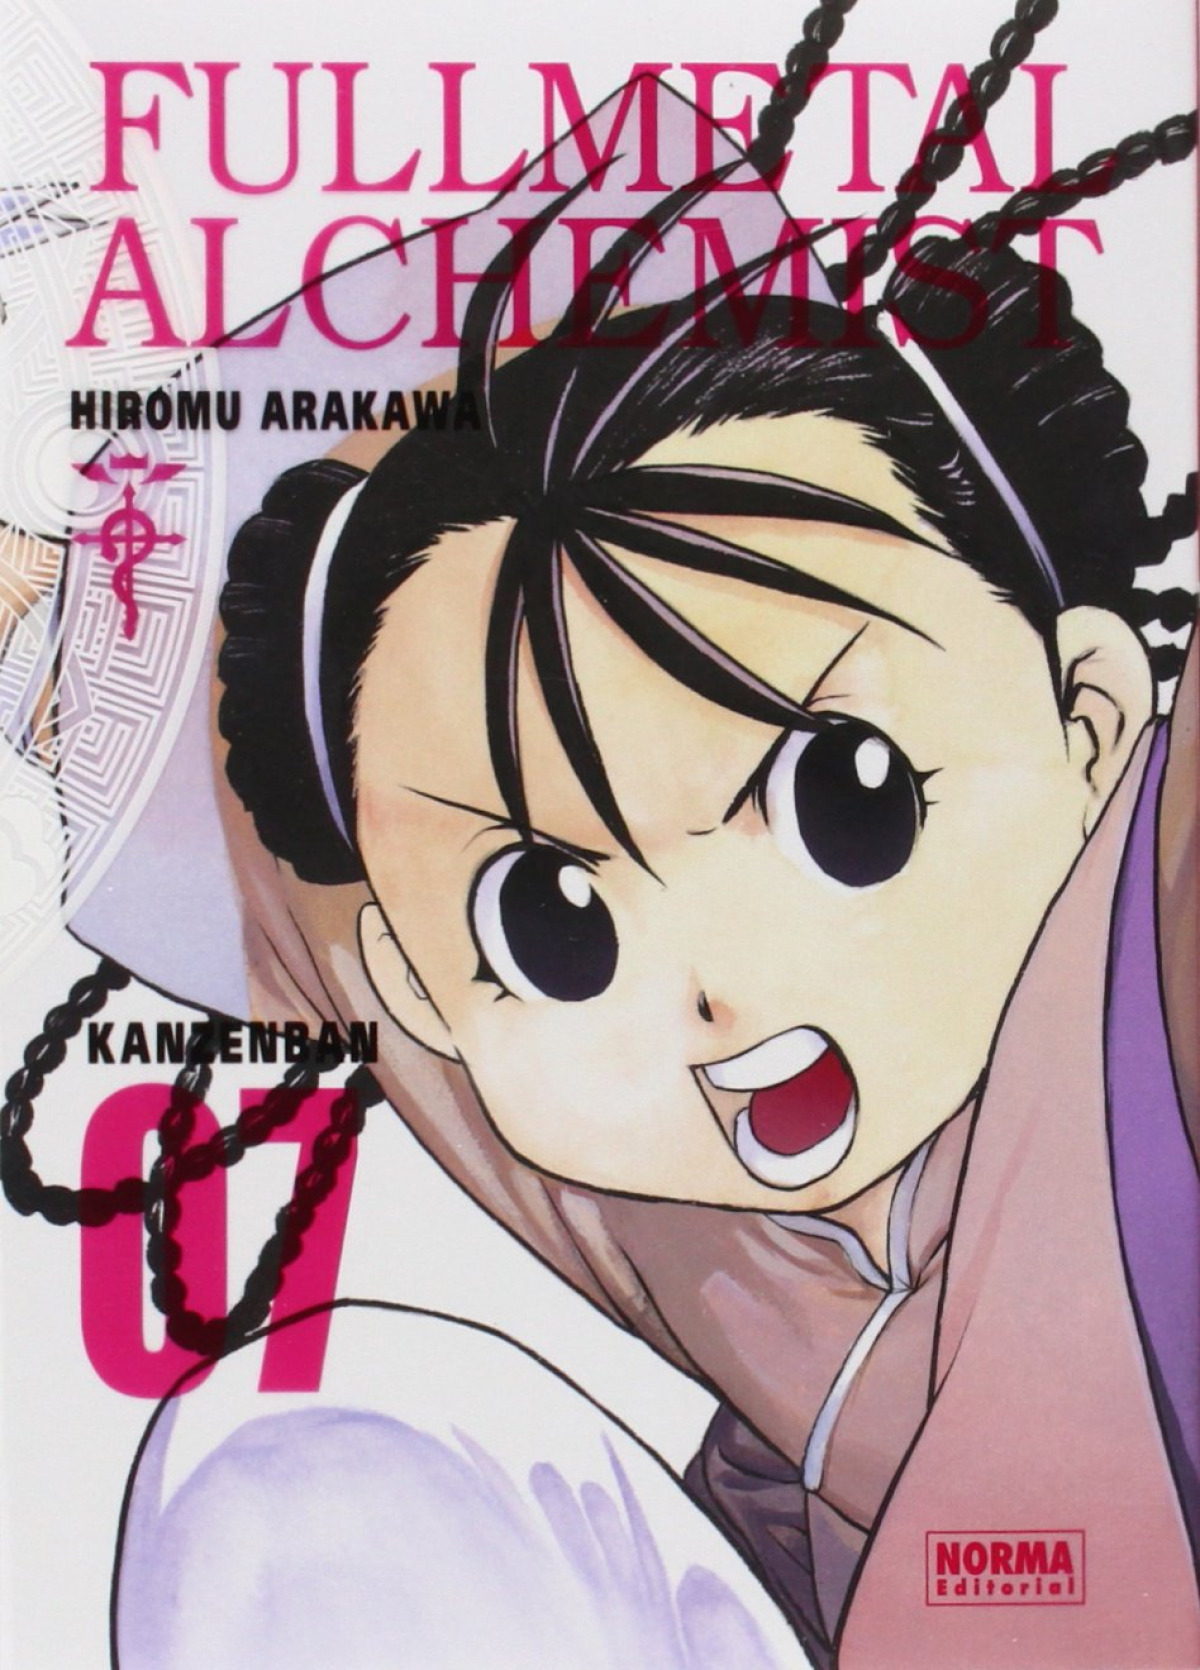 Fullmetal alchemist kanzenbarn - Arakawa, Hiromu